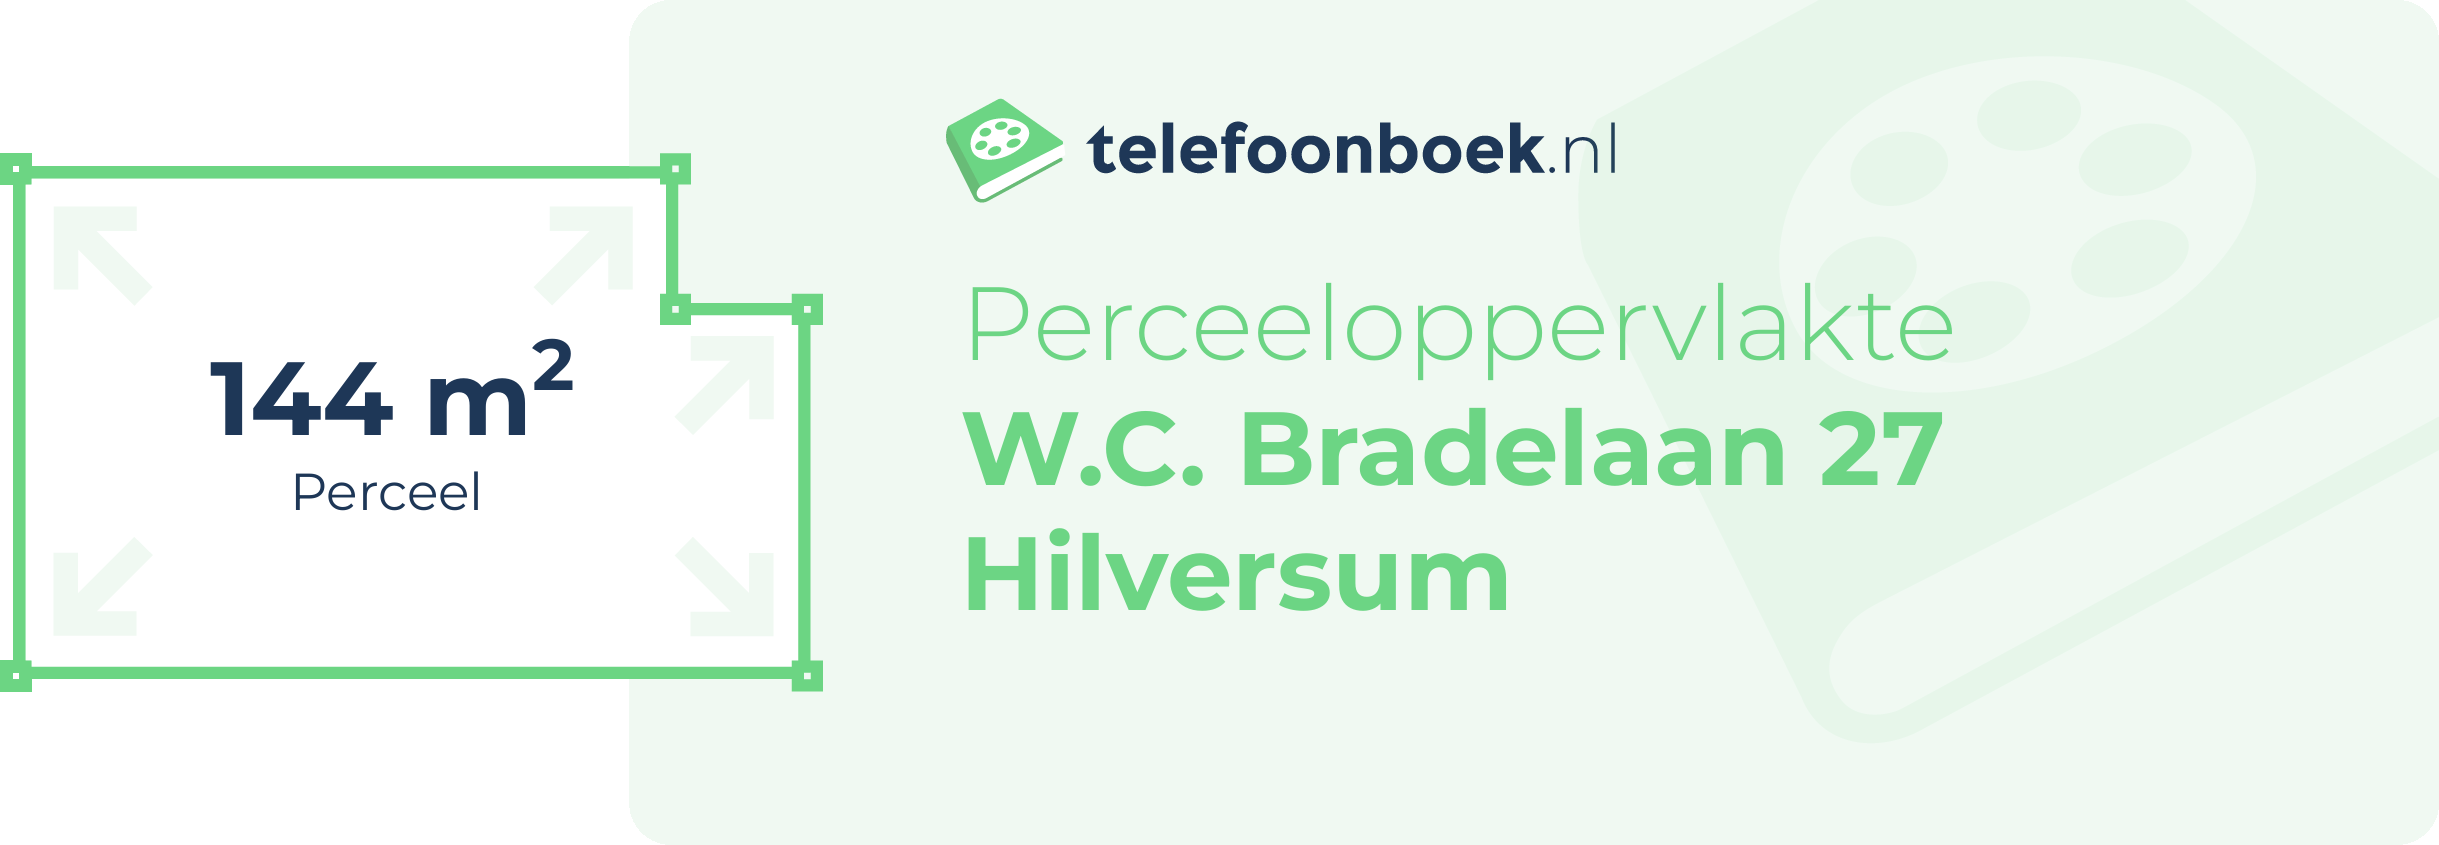 Perceeloppervlakte W.C. Bradelaan 27 Hilversum